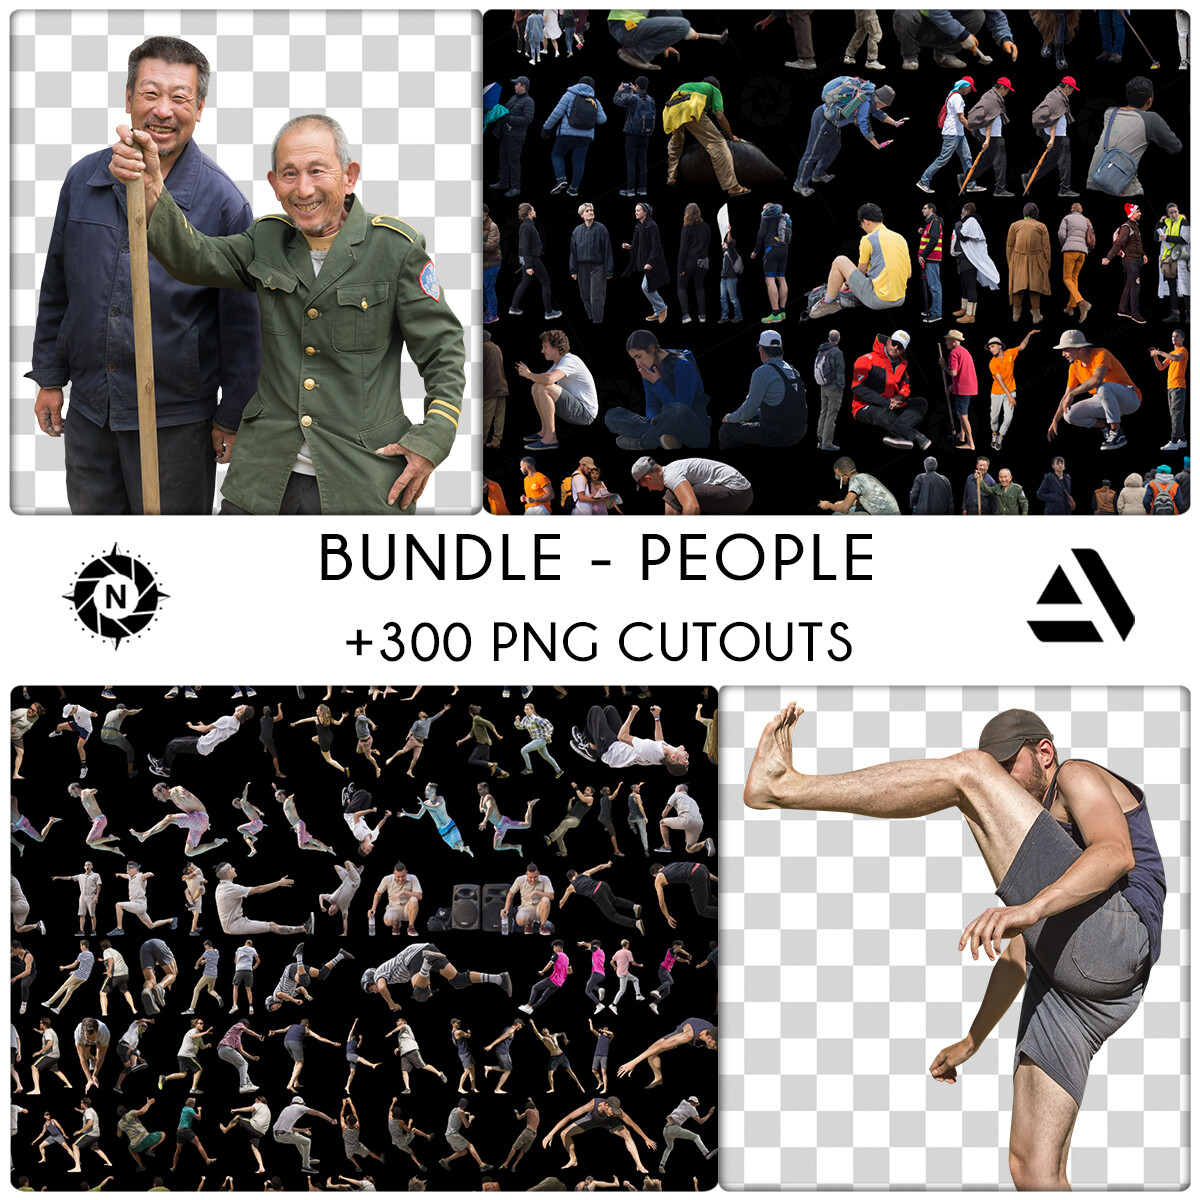 Bundle: PNG Cutouts - People - Freelance License

https://www.artstation.com/a/5465287